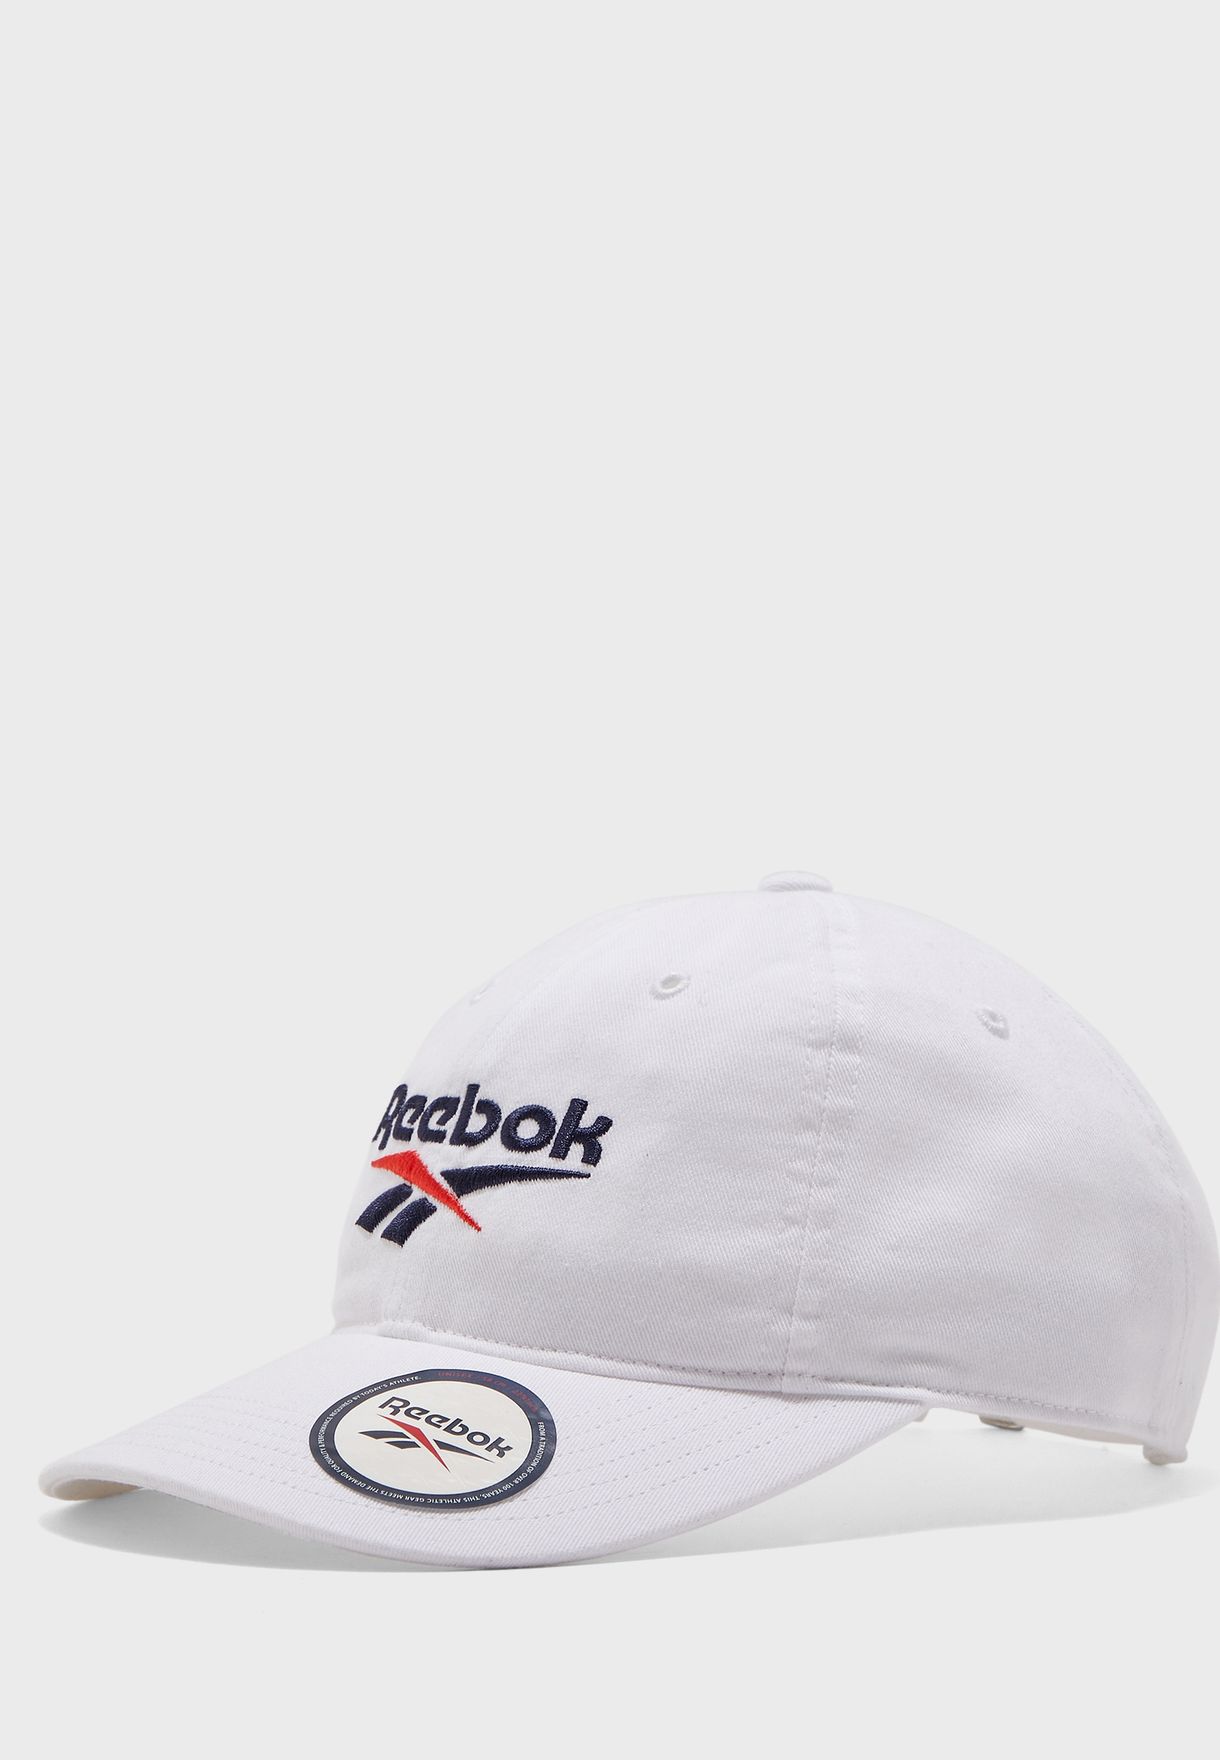 reebok original cap price